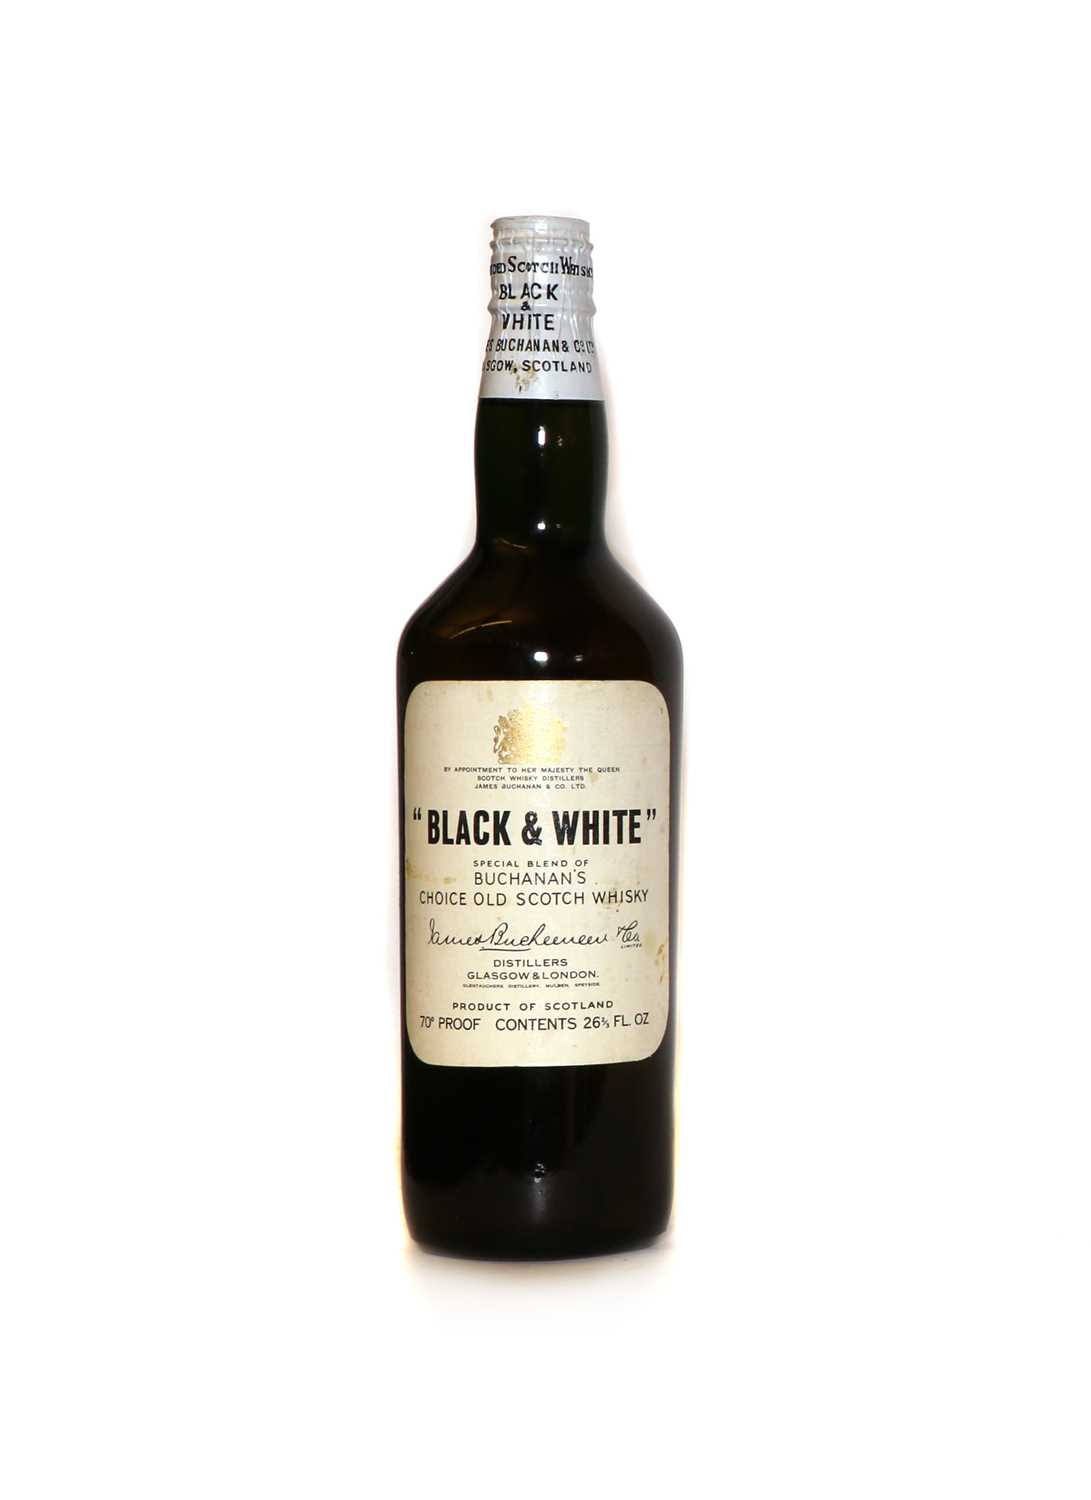 Lot 48 - Black & White Buchanan's Choice Old Scotch Whisky